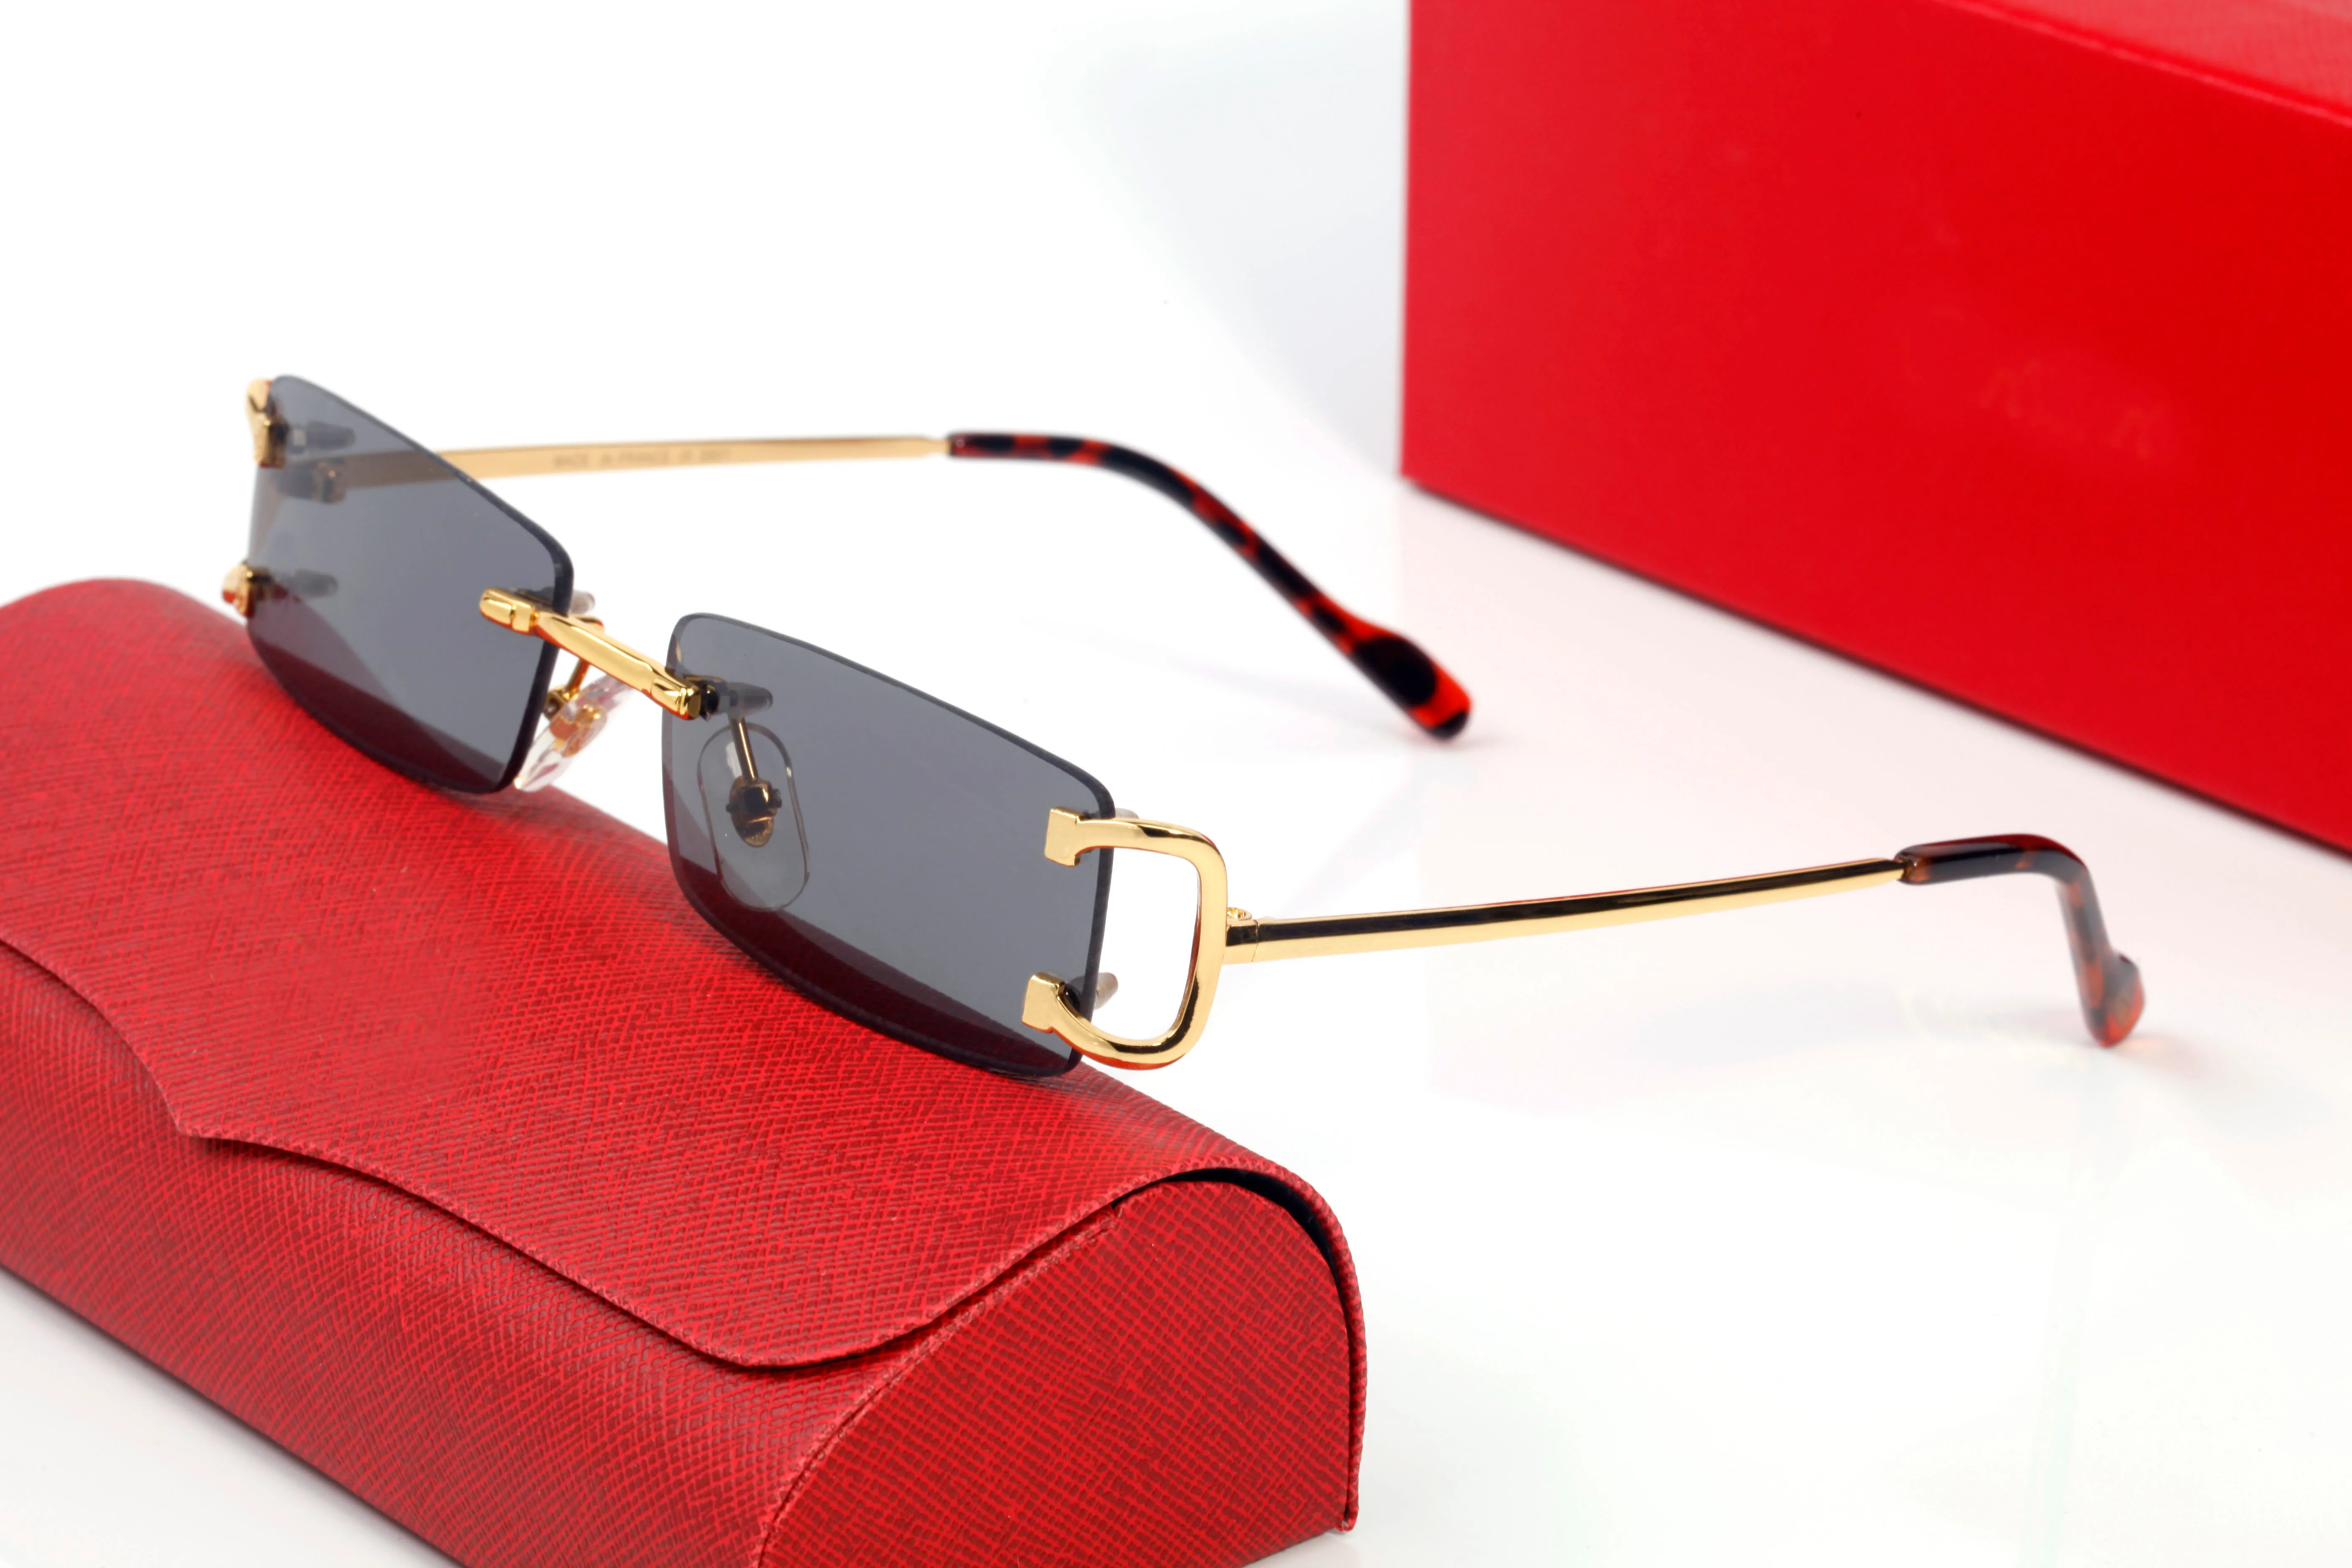 Merk Carti Bril Designer Zonnebril voor Mannen Vrouwen Rechthoekige Frameloze Zonnebril Zilver Kleine Zijde Mode Zonnebril Frames Ey203P